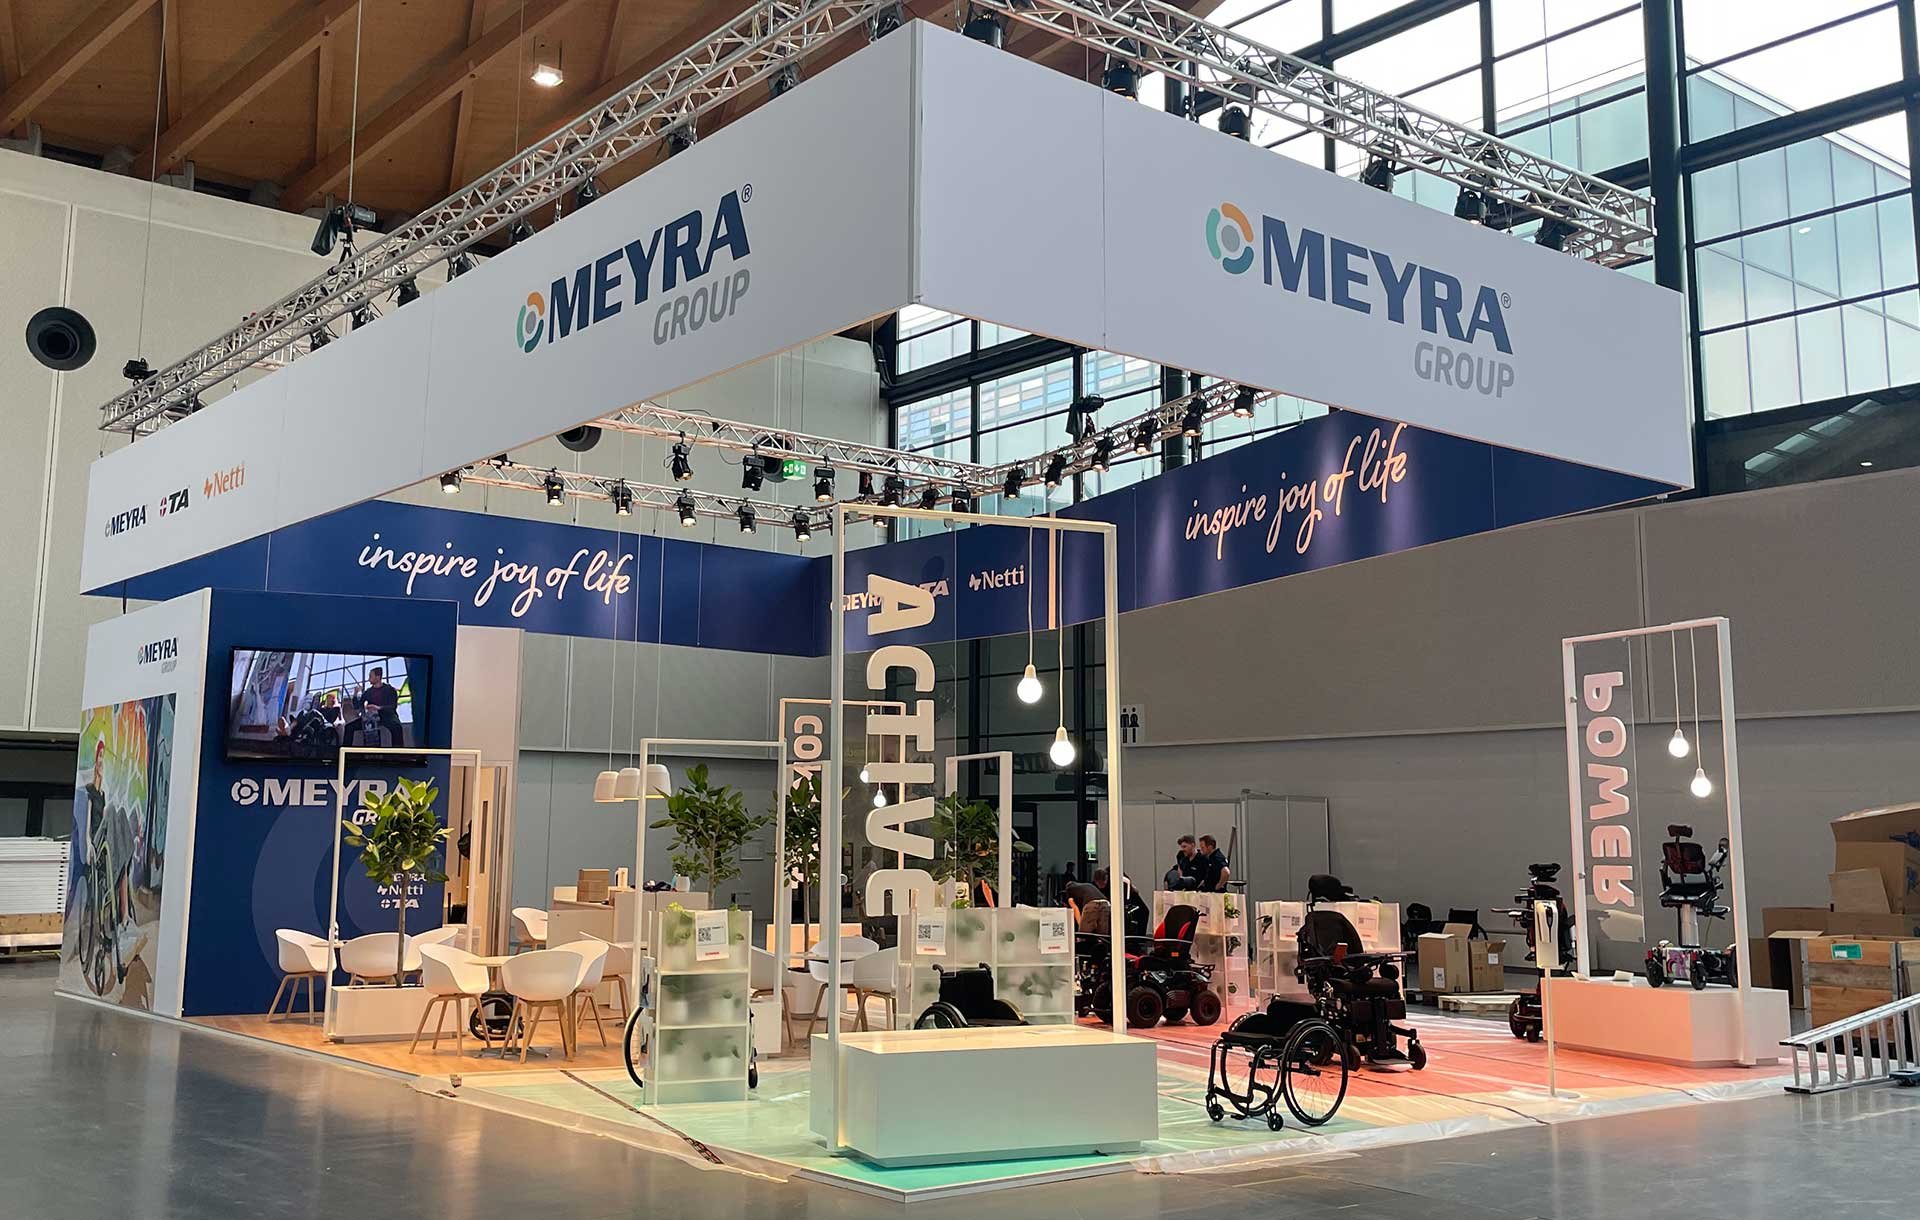 Scanex-Meyra-Group-Messestand-3